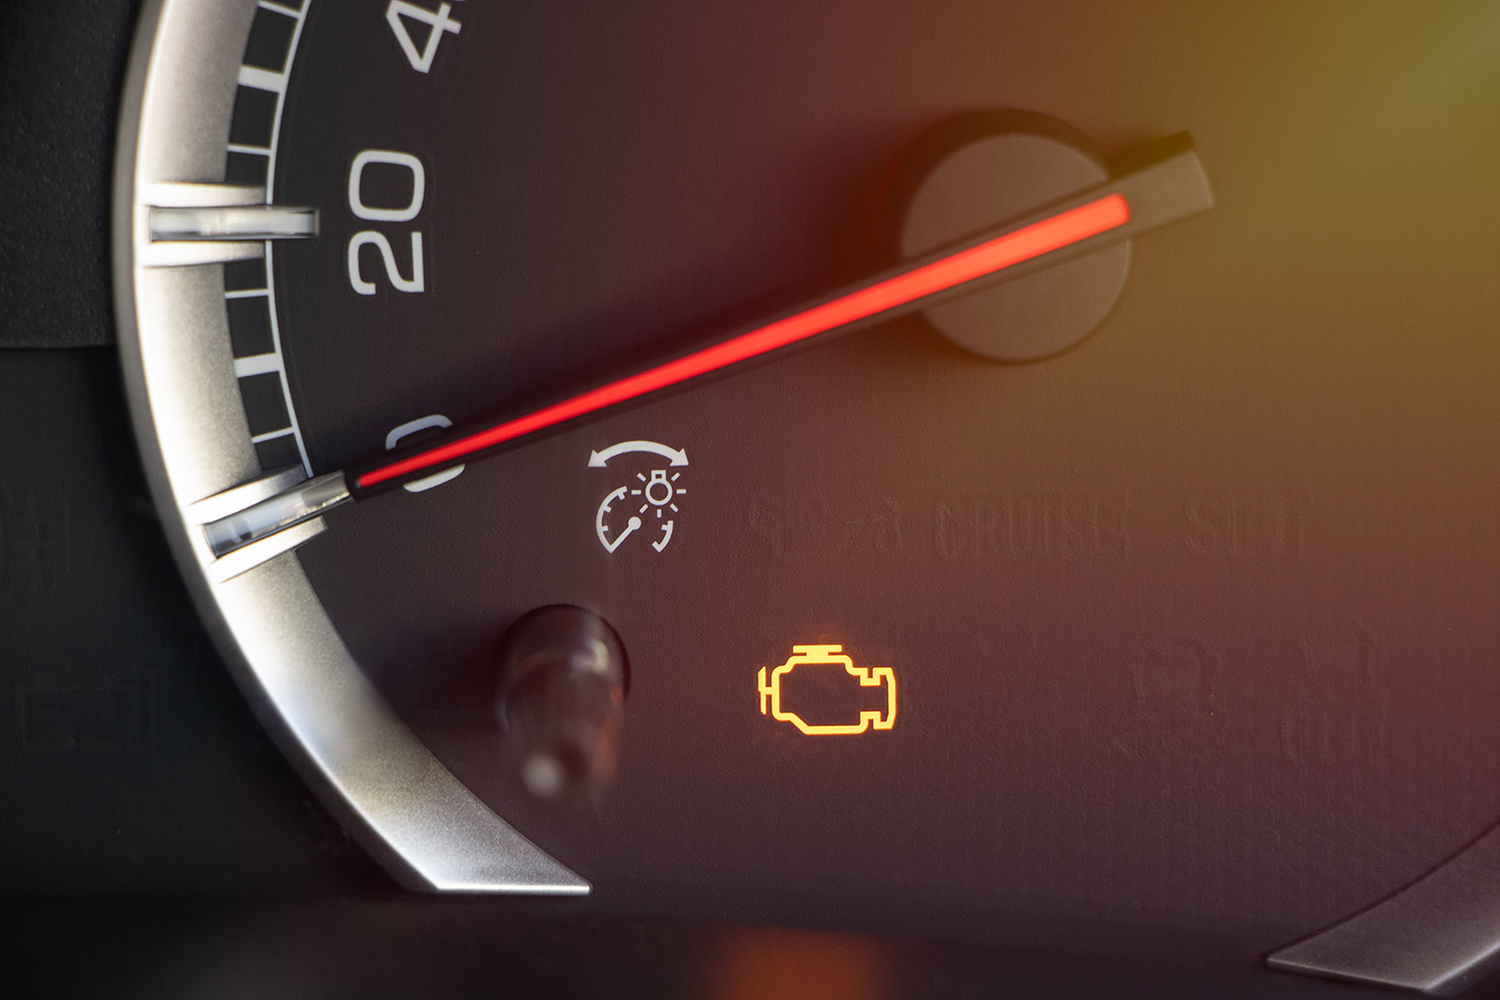 Check Engine Light Diagnostics and Repair in Walnut Cree - Frank’s Auto Service